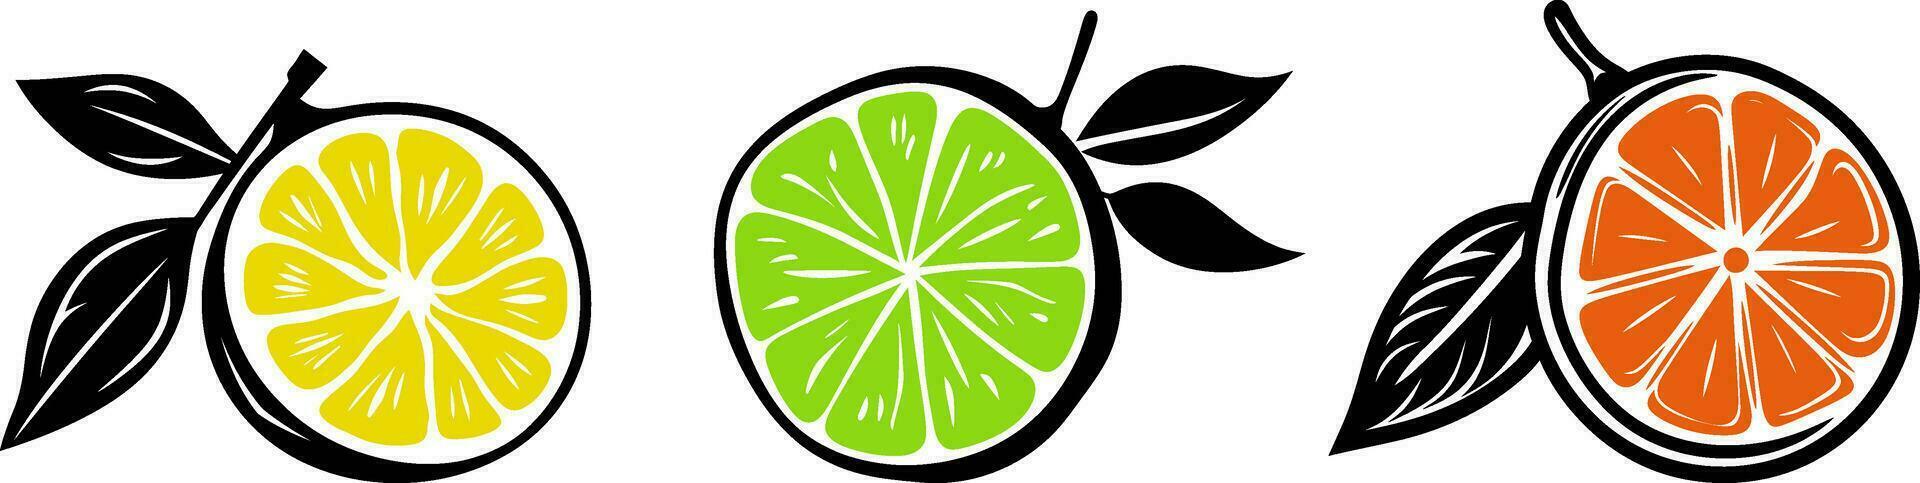 Citrus Vector Icons   Set of Fruit Symbols for Graphic Design